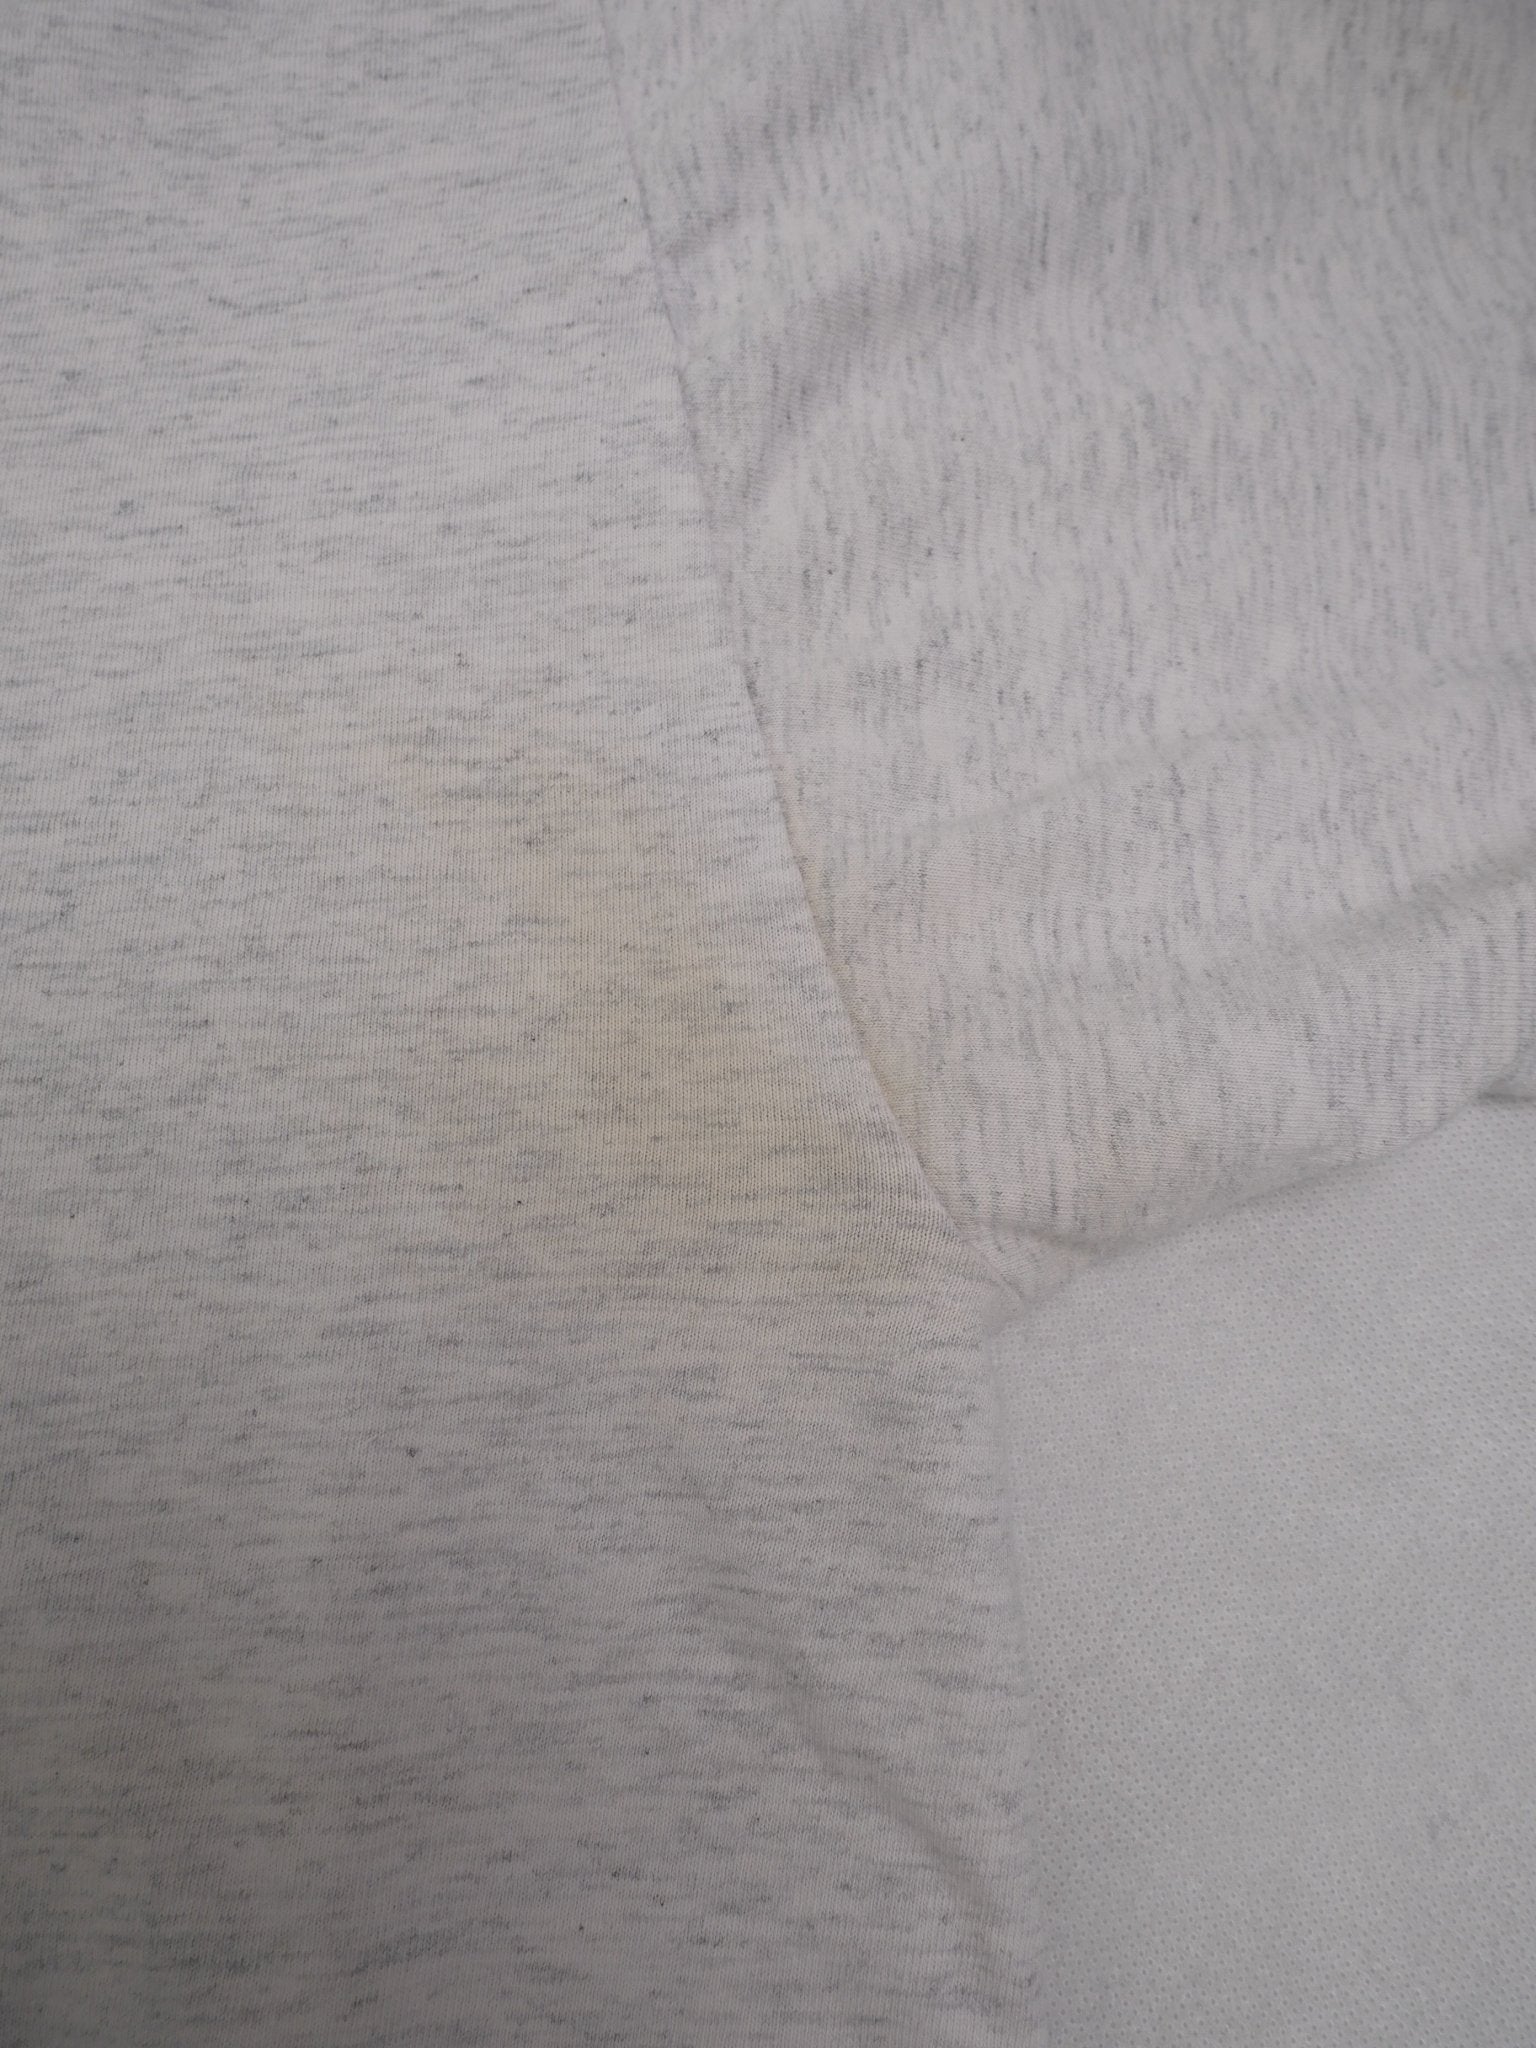 Big Dog Gym printed Logo grey Shirt - Peeces